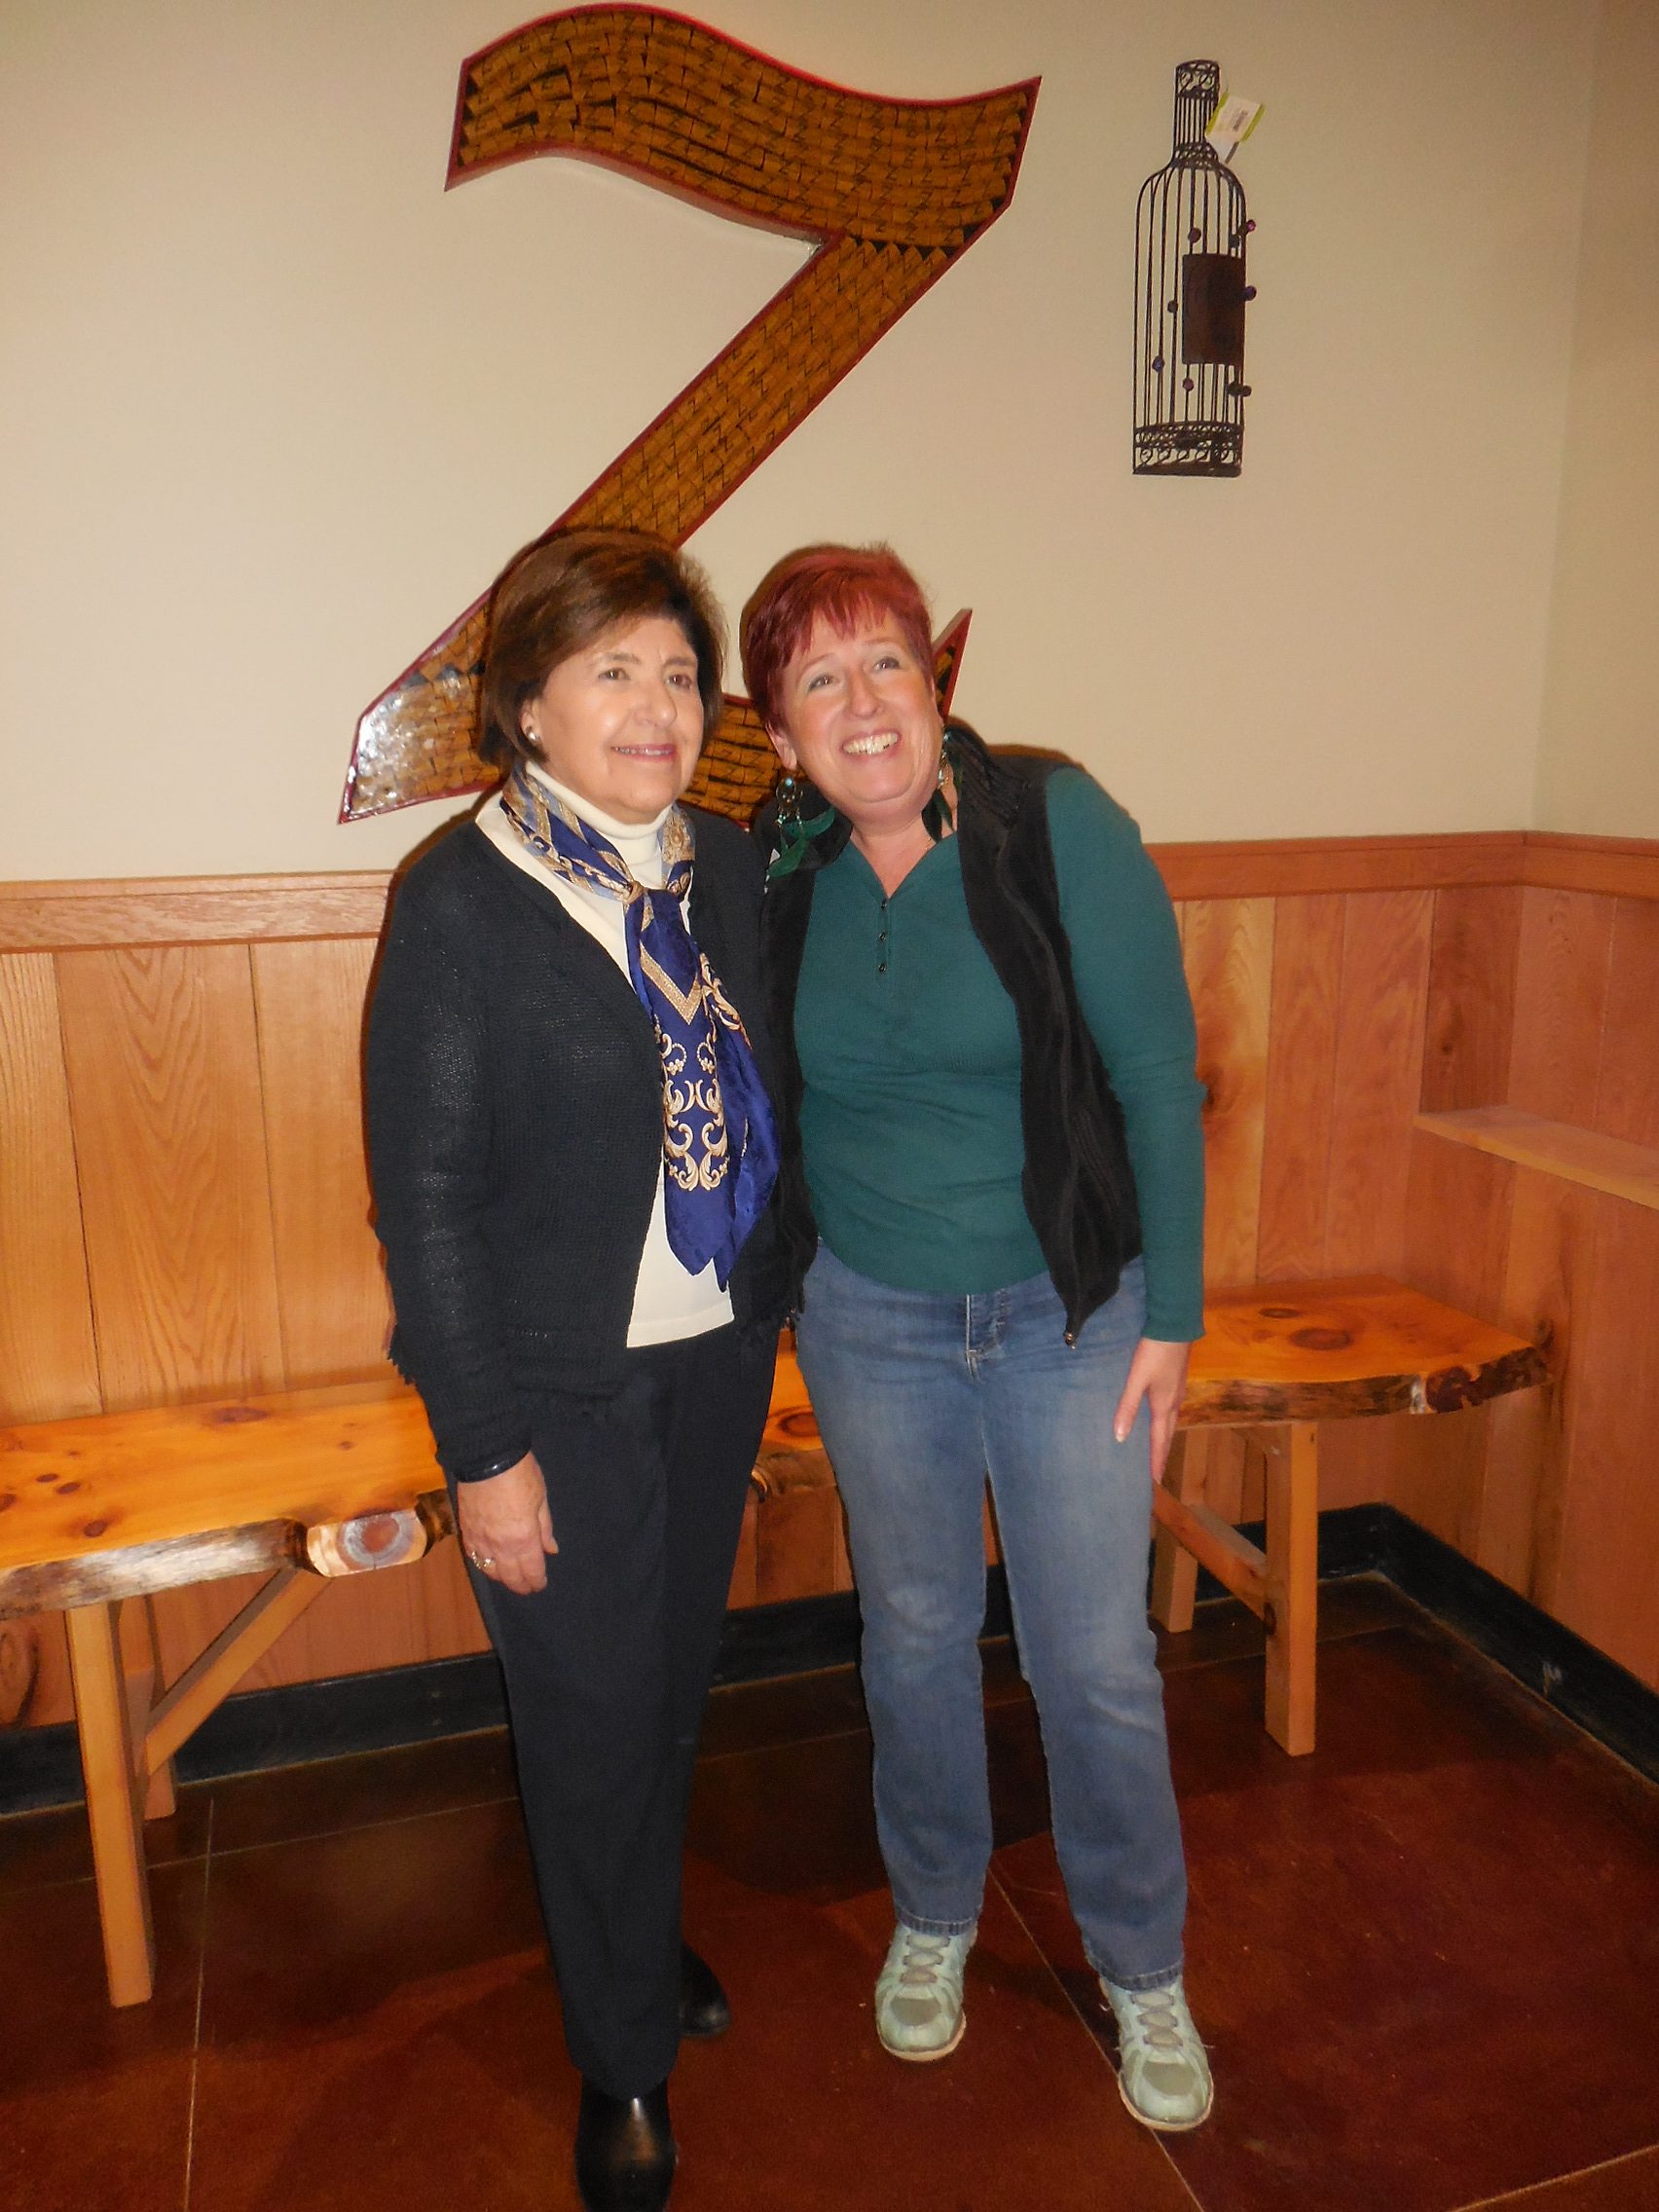 Mary Ann Esposito and Zorvino Vineyards staff